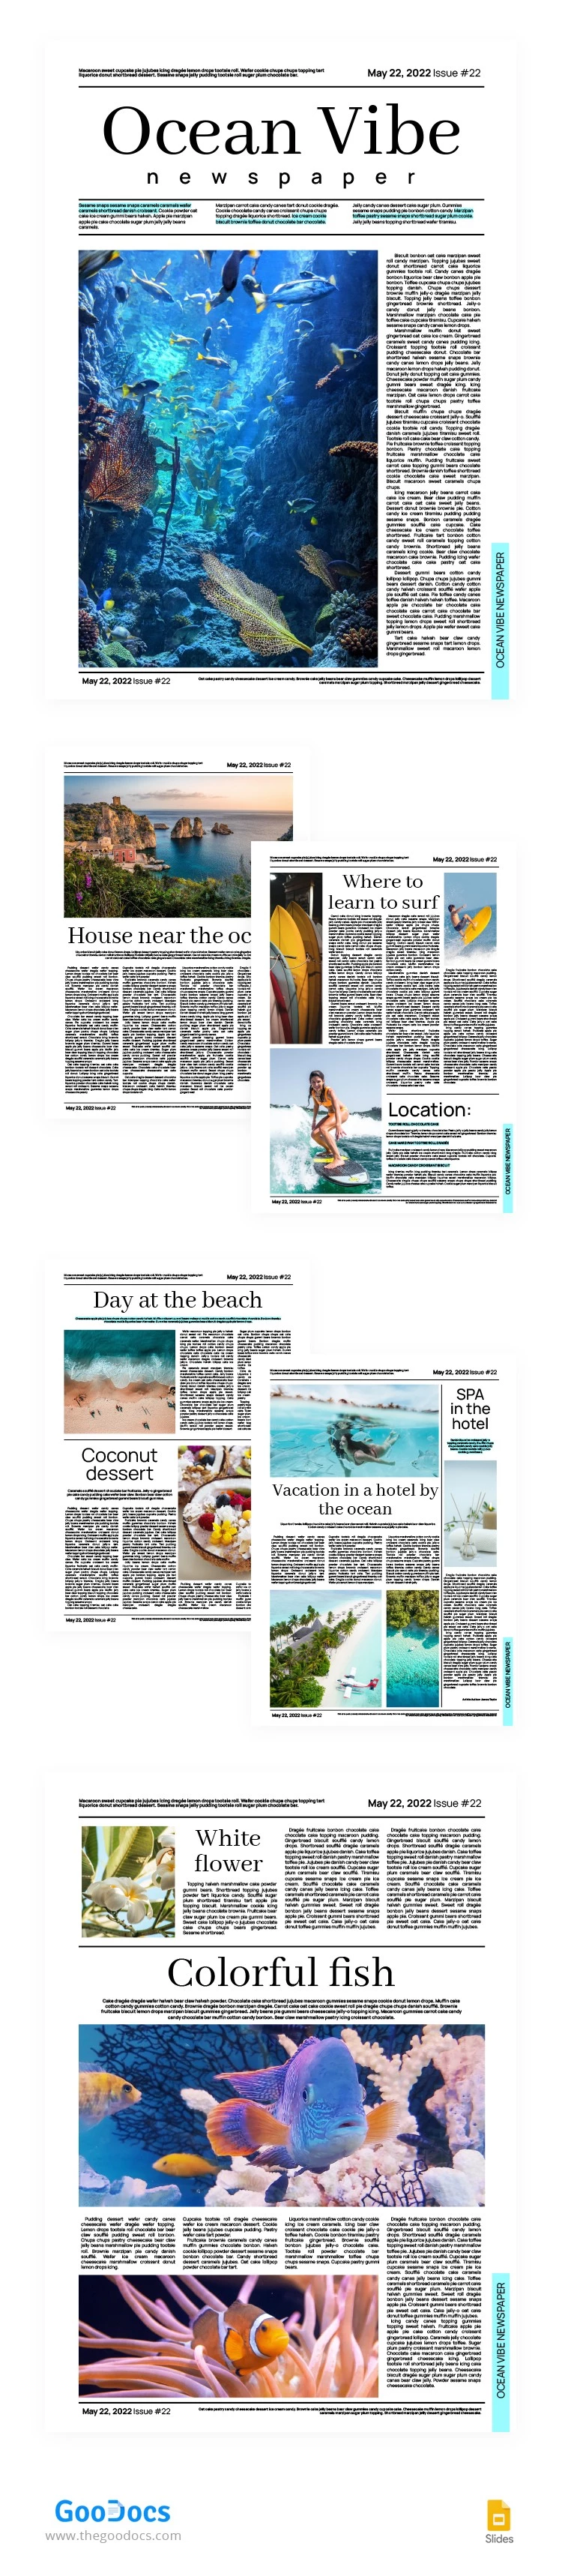 Ocean Vibe Newspaper - free Google Docs Template - 10063861